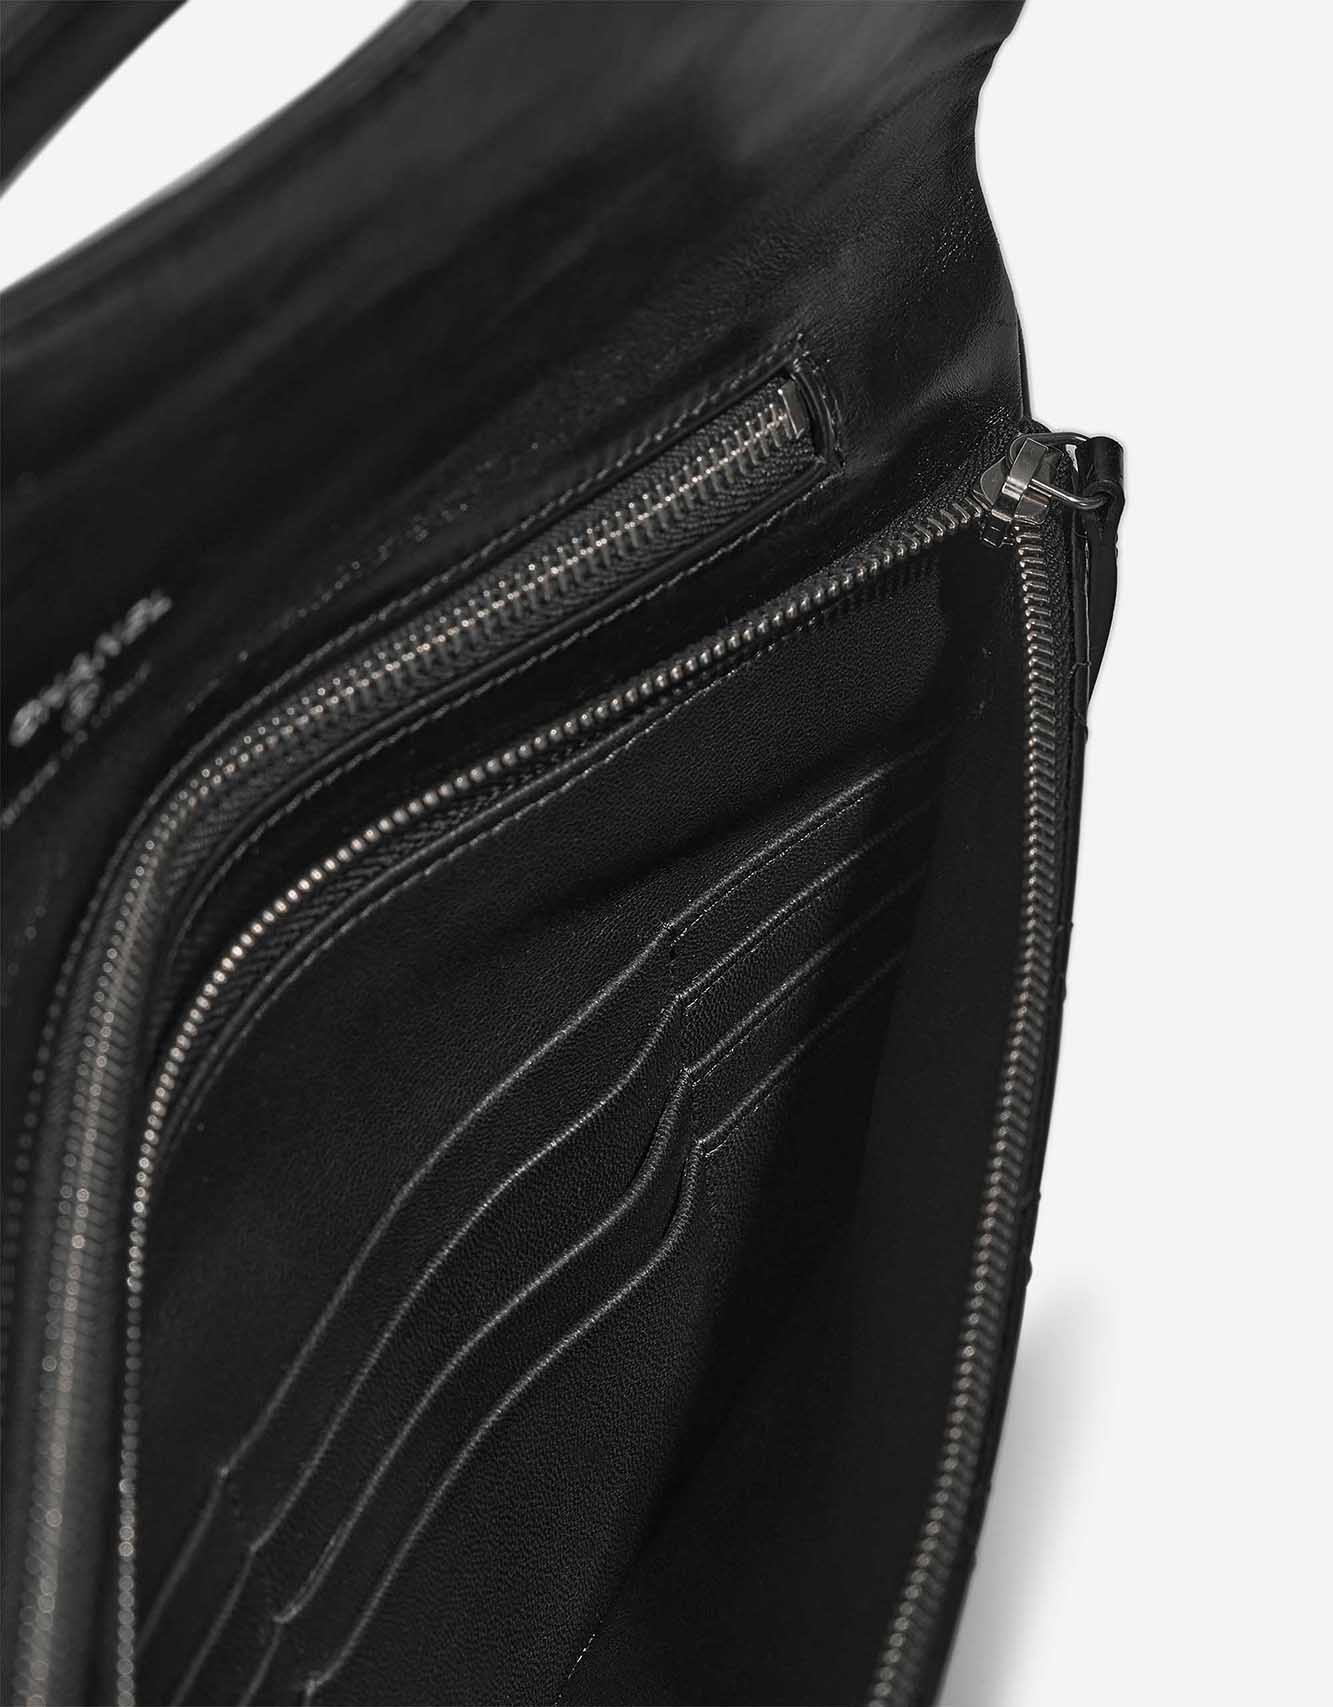 Chanel 31 Clutch Aged Calf Black / White Inside | Sell your designer bag